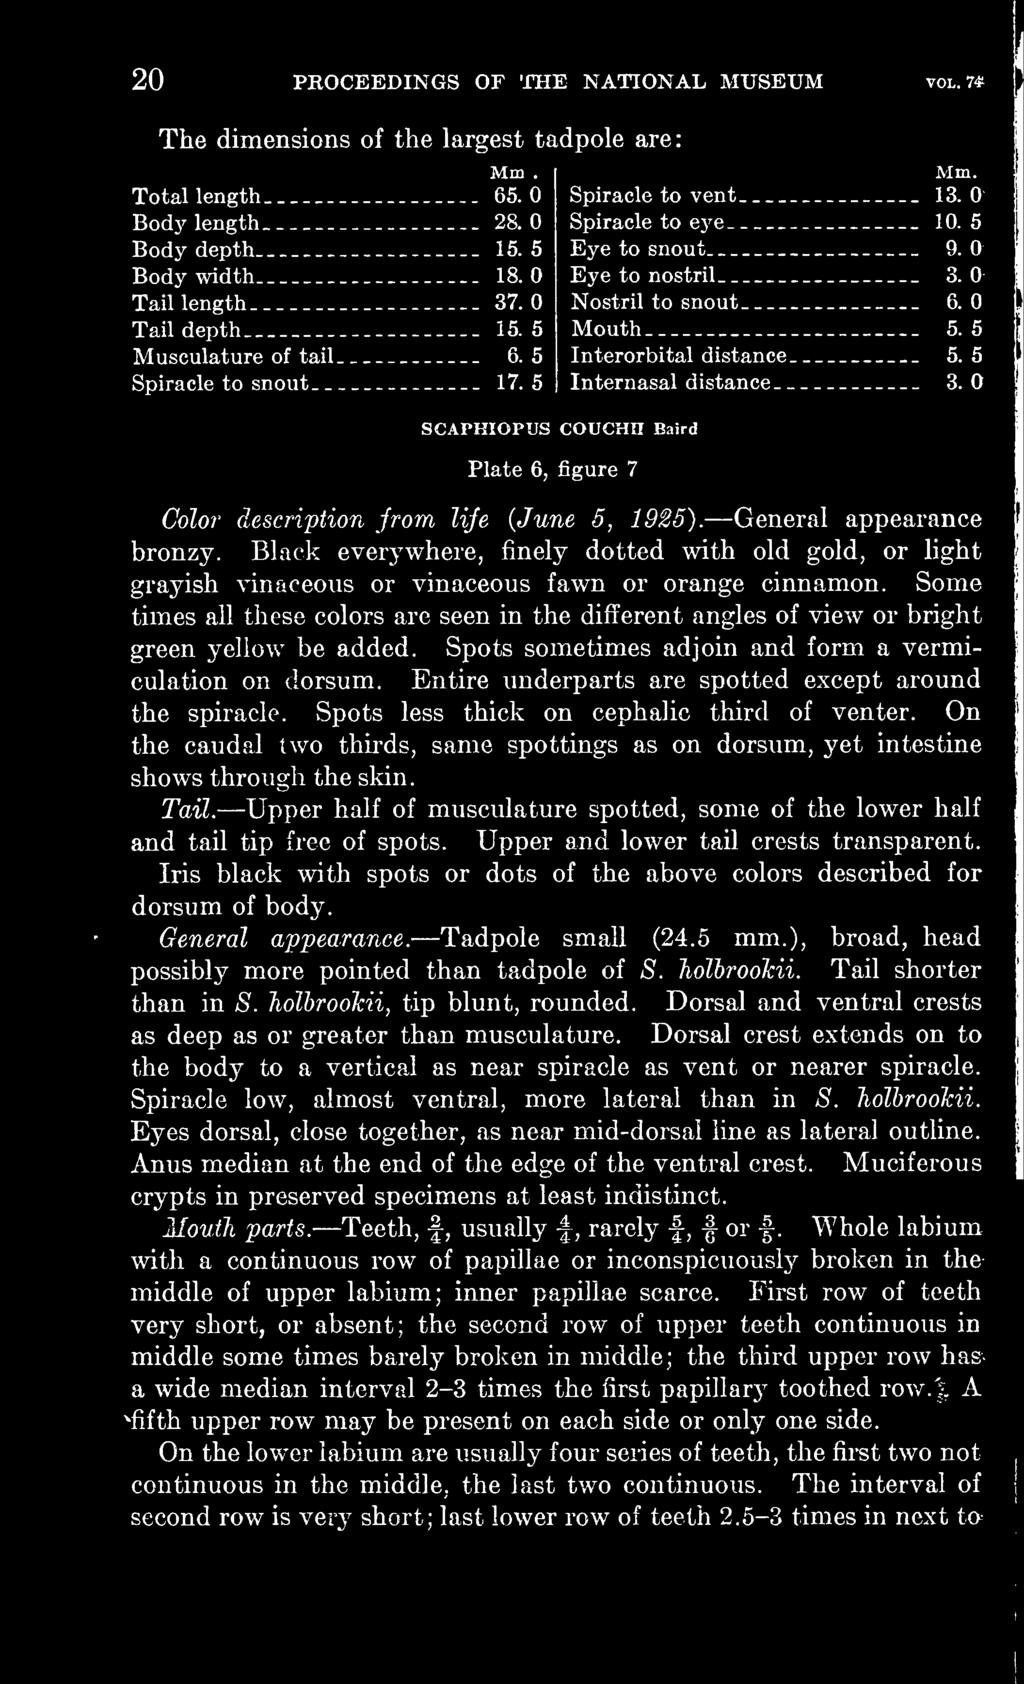 5 Interorbital distance 5. 5 Internasal distance 3. Color description from life (June 5, 1925). General appearance bronzy.